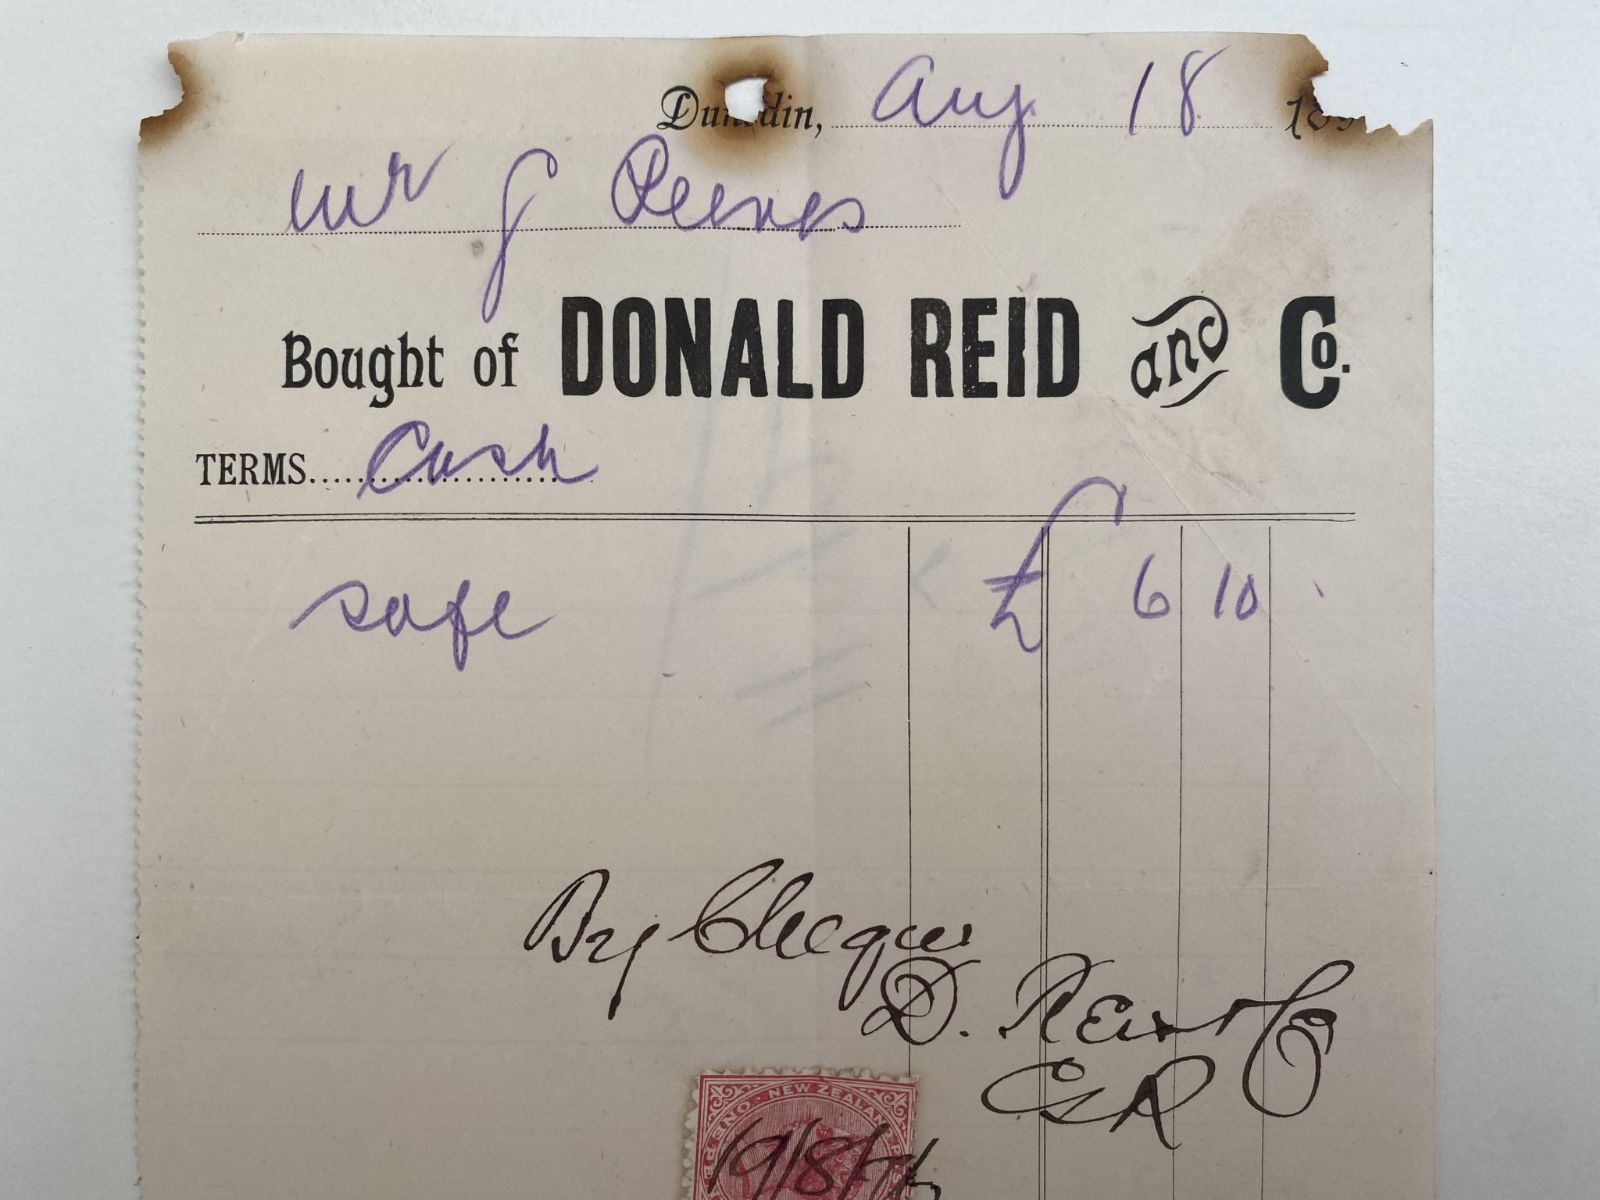 OLD INVOICE: Donald Reid & Co 1896 (126 yo)